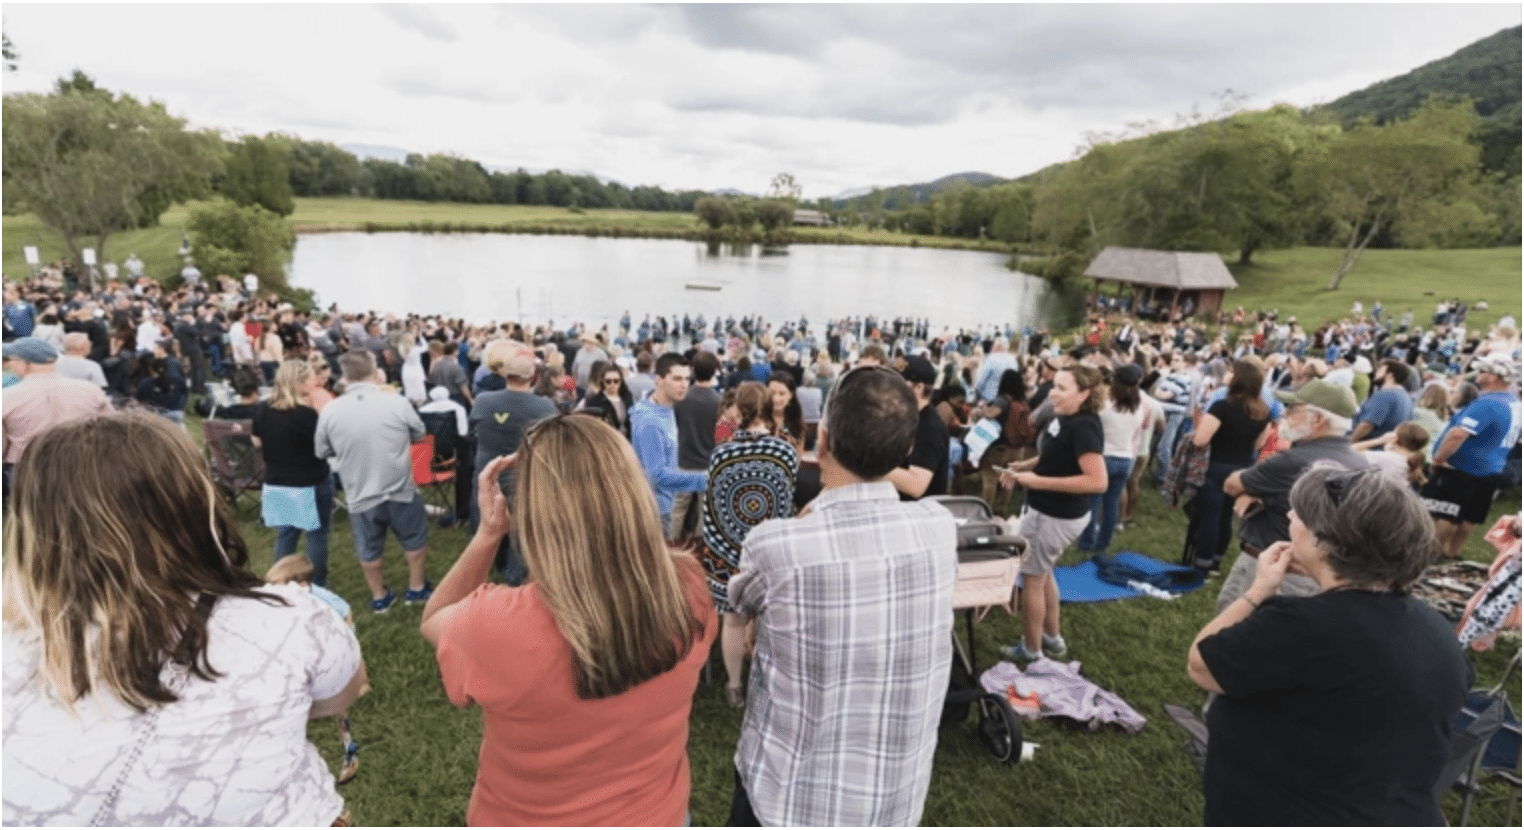 North Carolina megachurch baptizes nearly 300 people in a single day